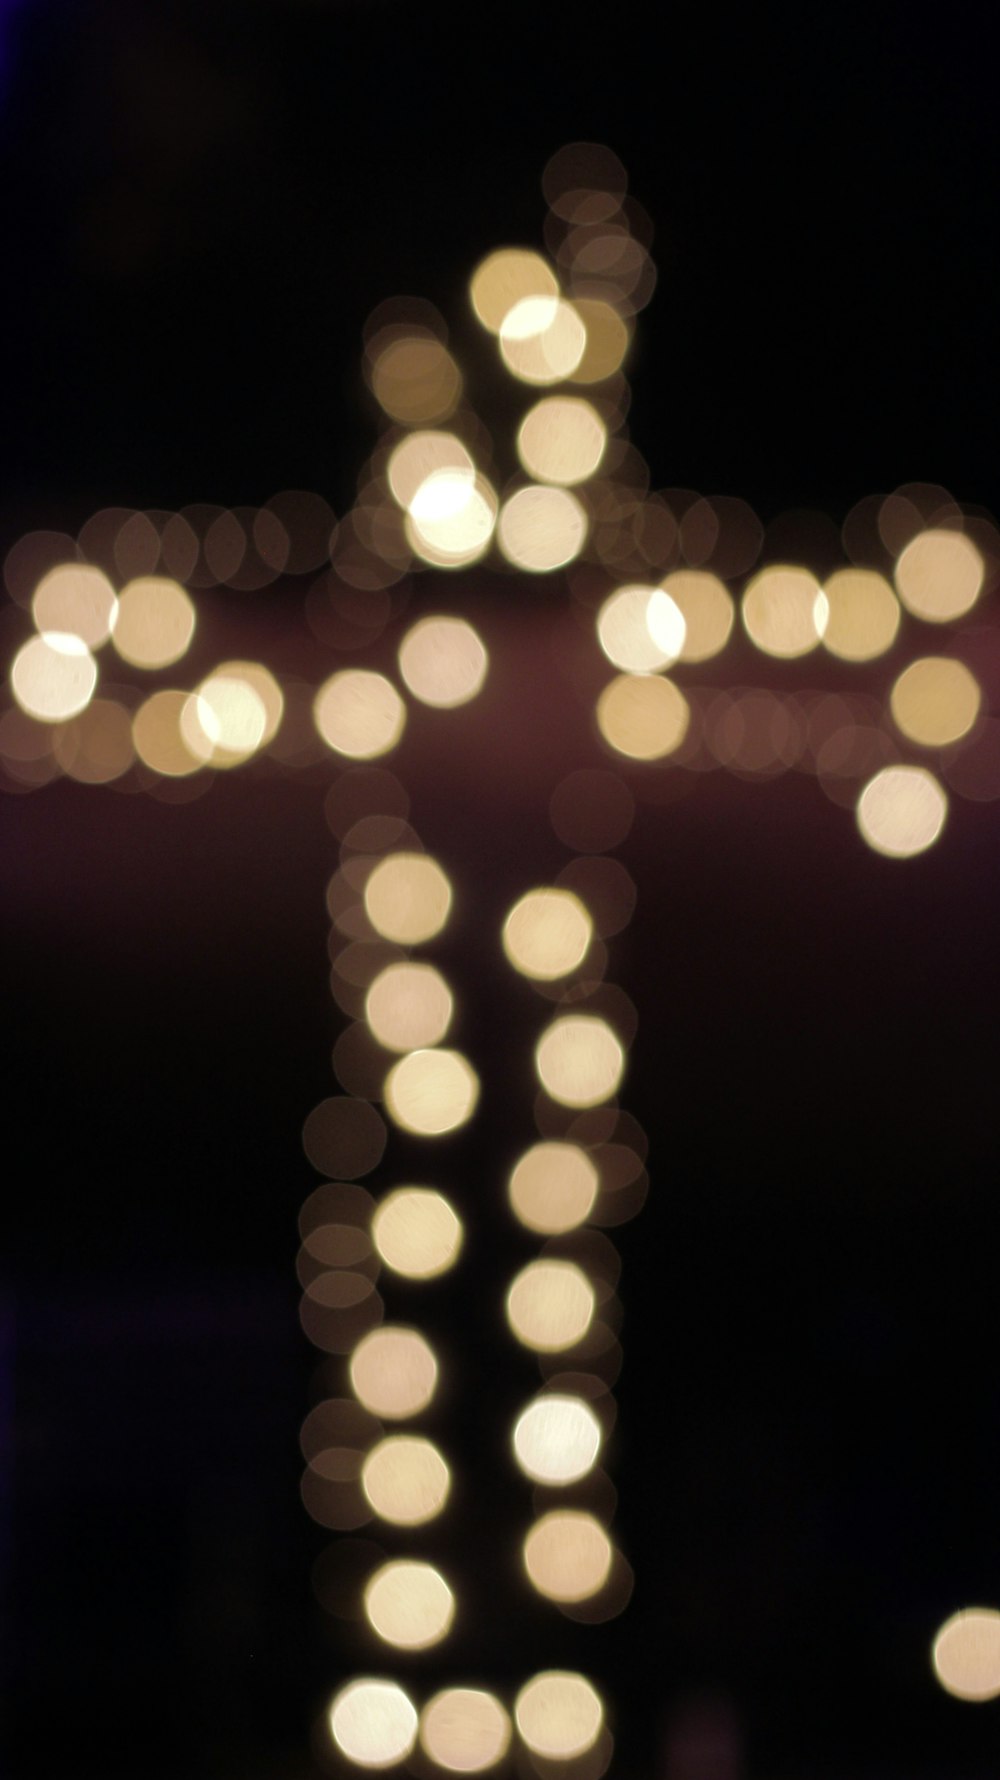 Fremmed Stolthed Ti Cross Light Pictures | Download Free Images on Unsplash